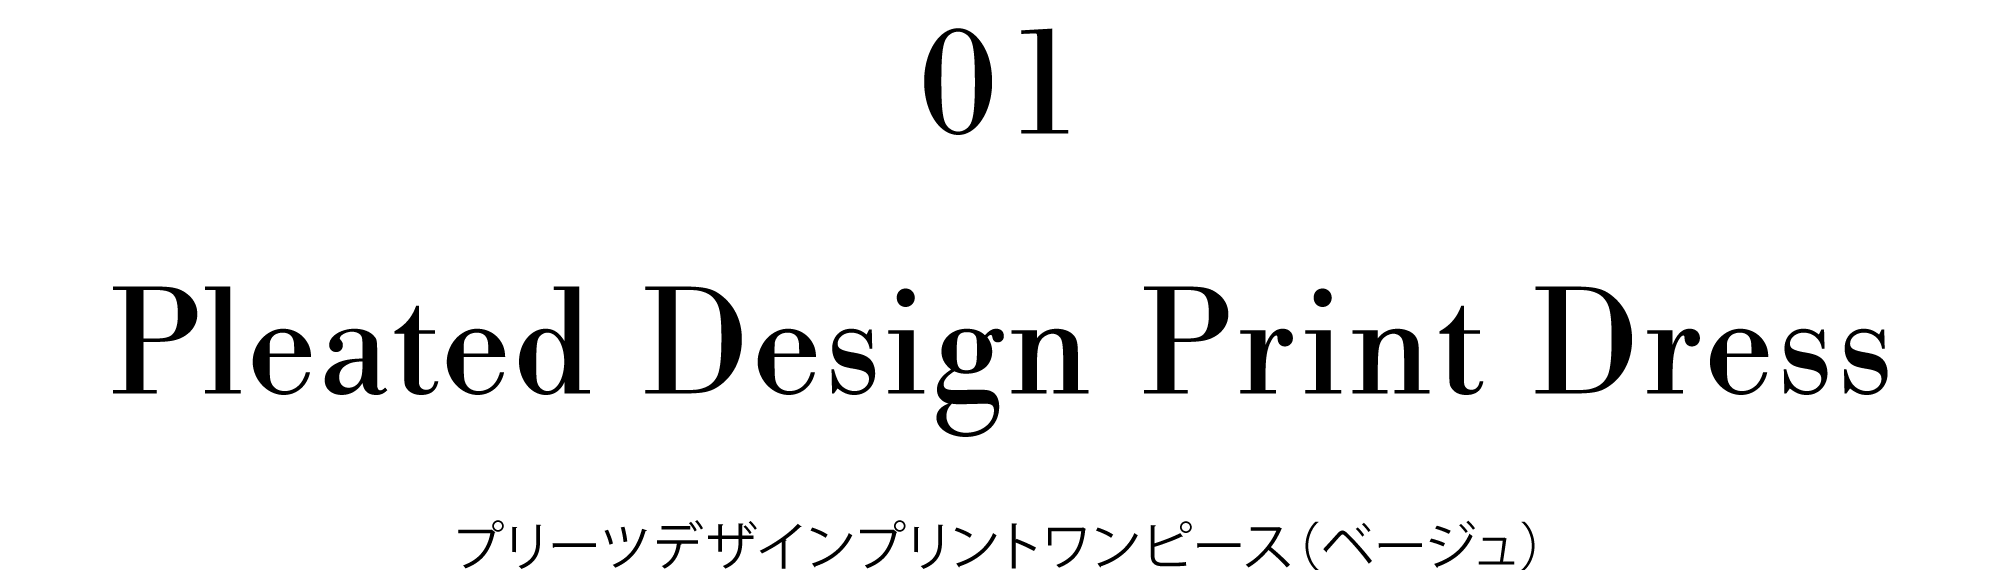 01 Pleated Design Print Dress